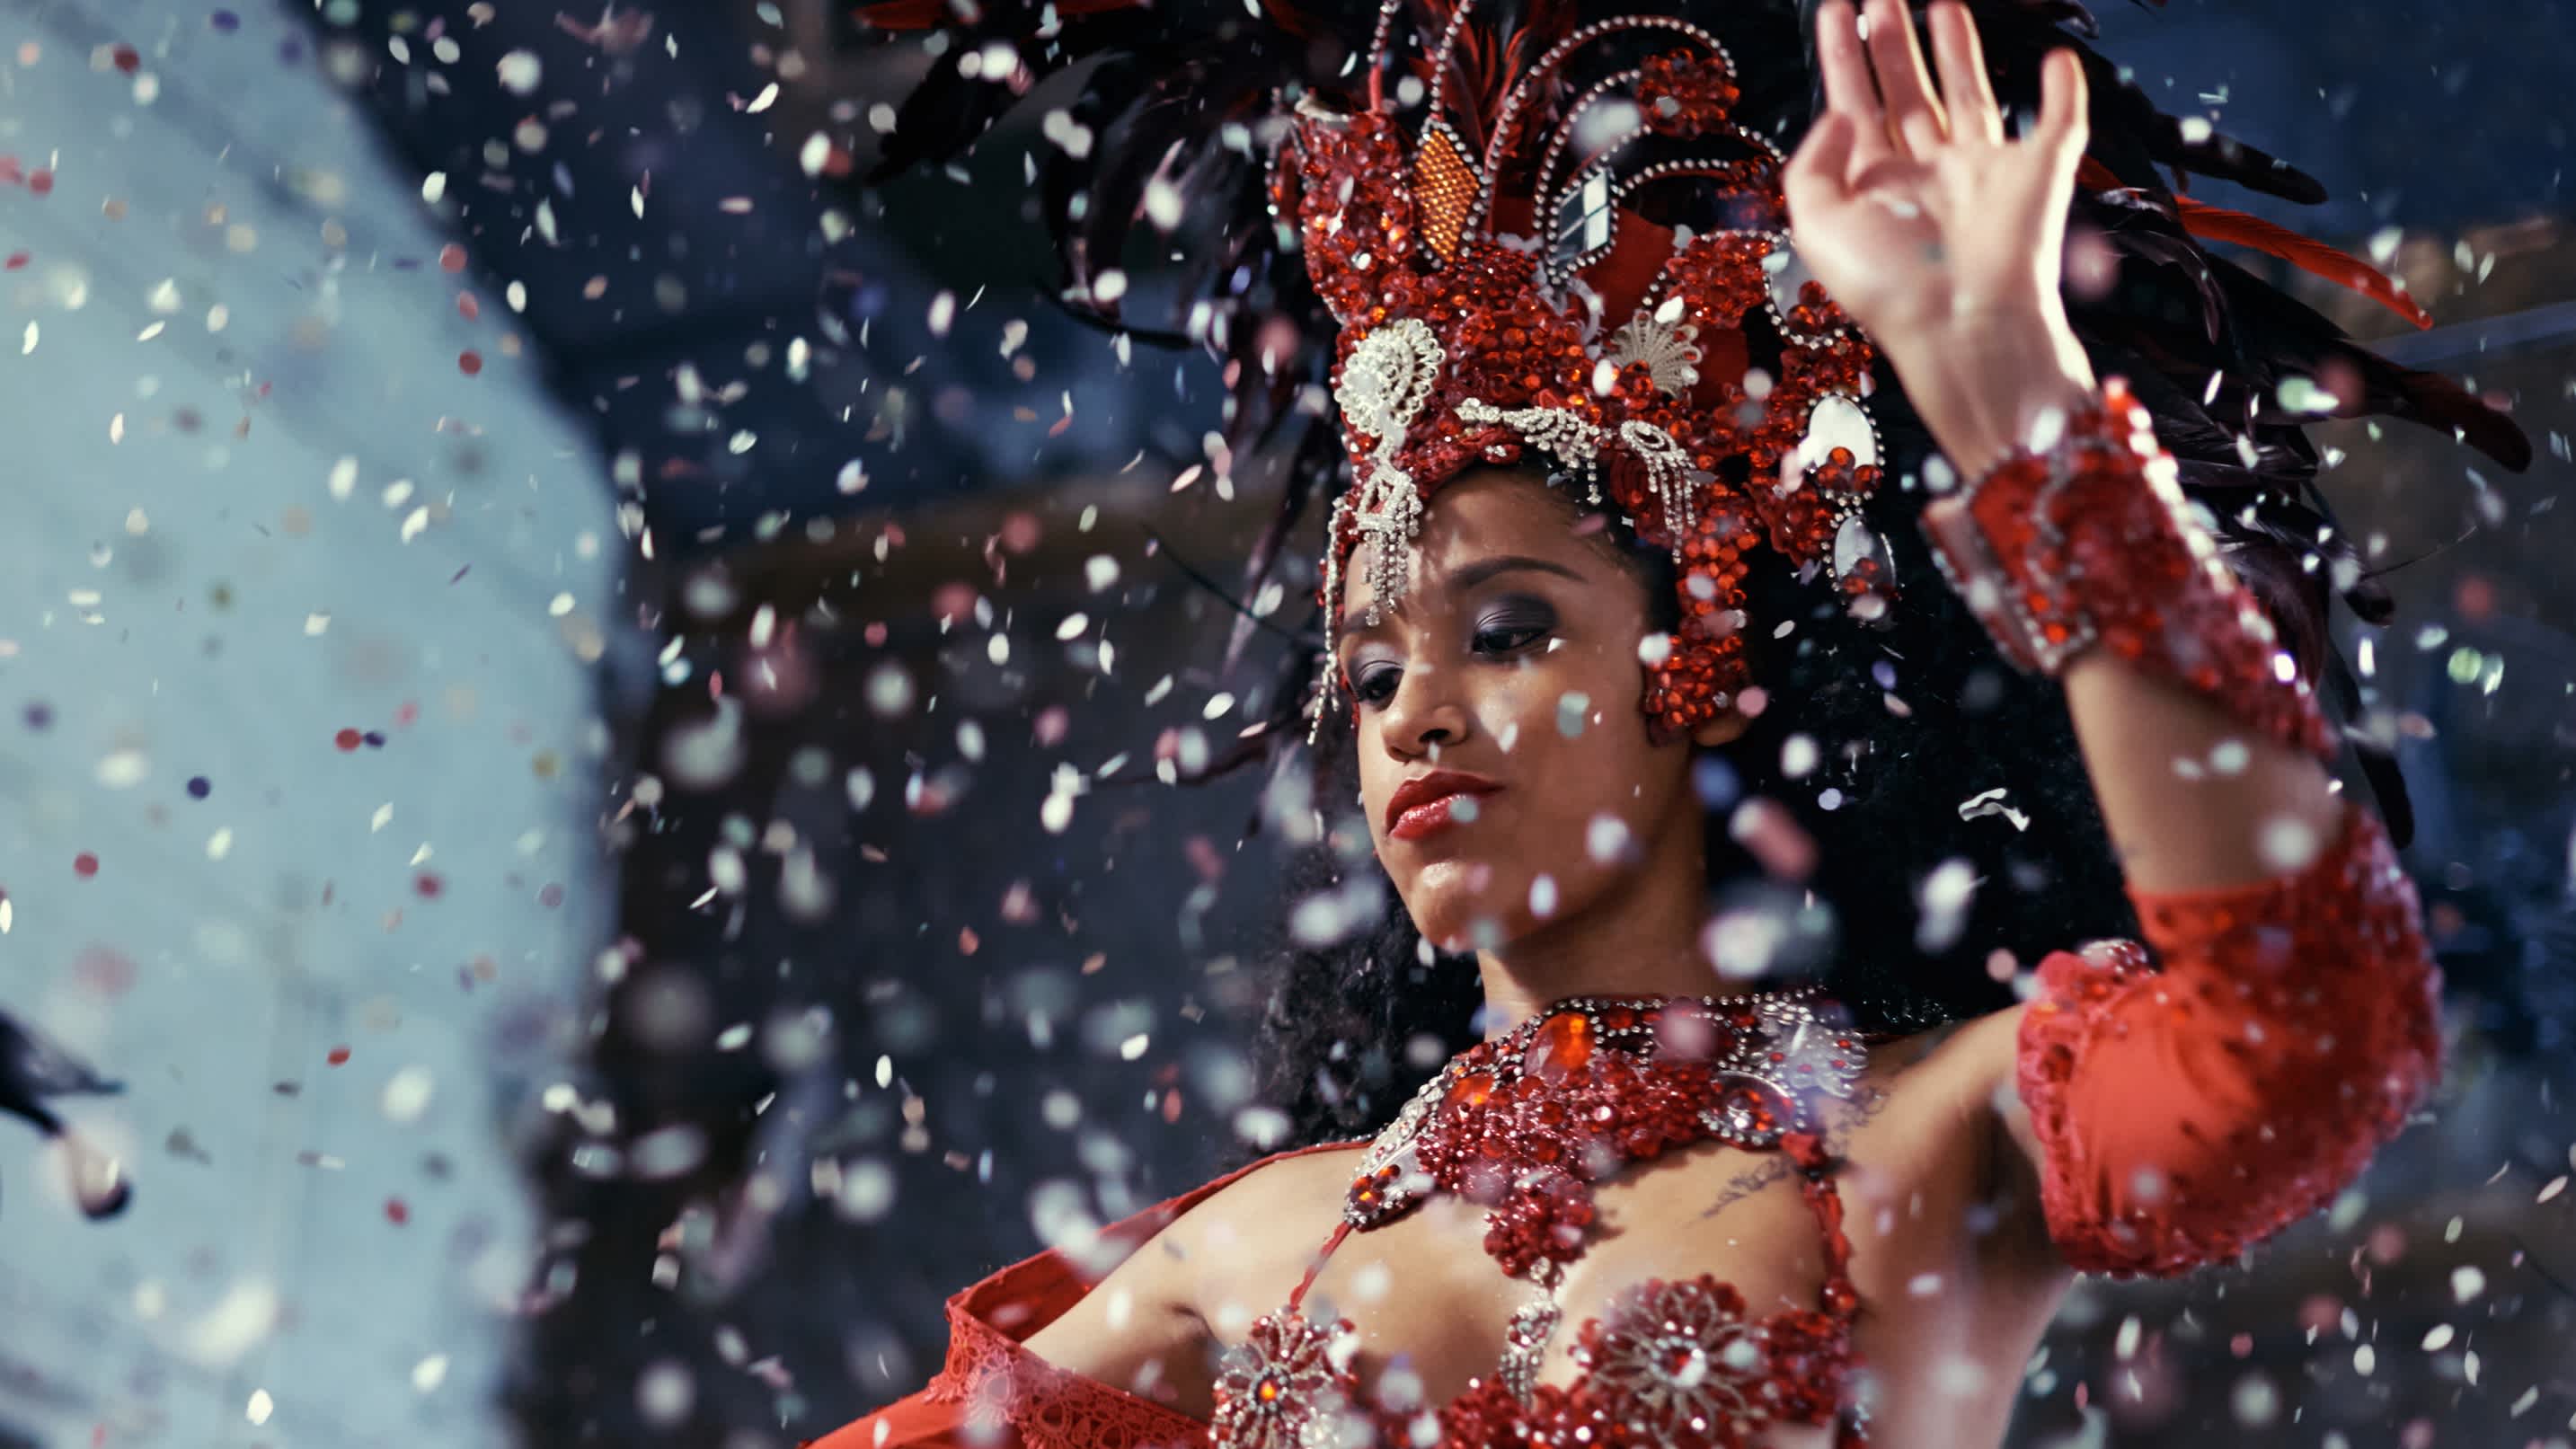 South America, Brazil, Rio de Janeiro, a carnival dancer wearing a feather headdress is showered in confetti